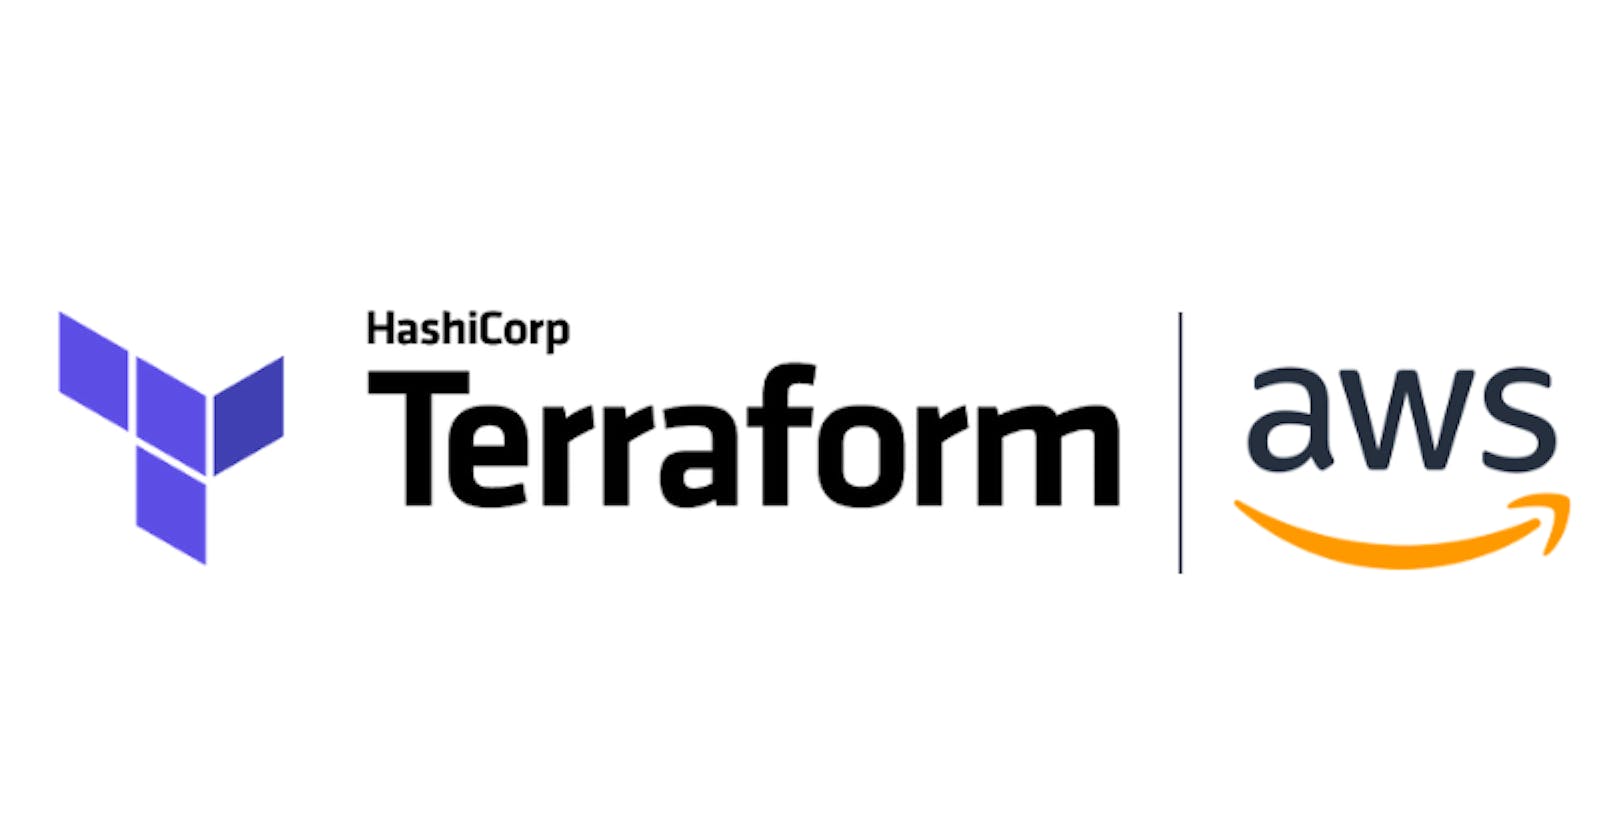 How to install Terraform on Ubuntu